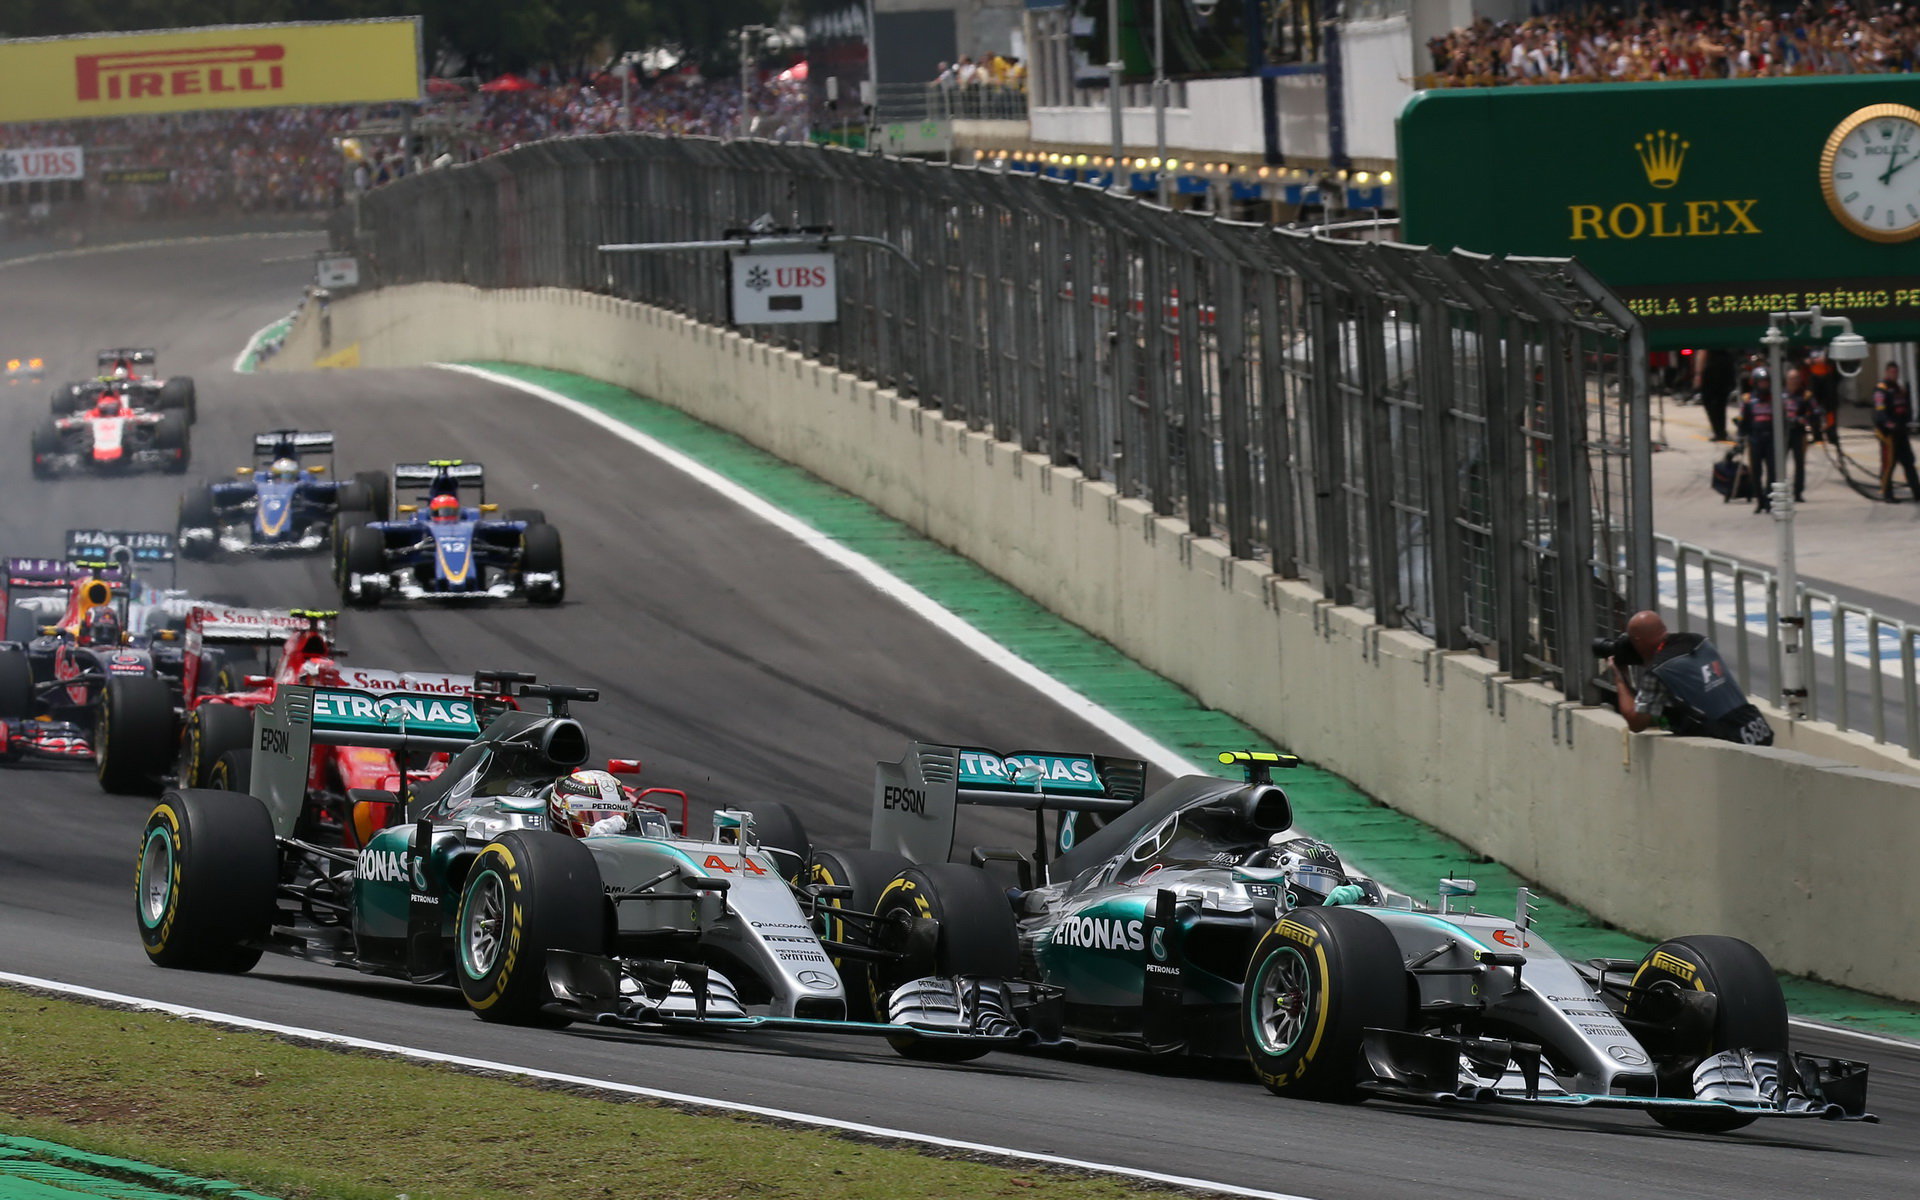 Loňský postartovní souboj Nica Rosberga s Lewisem Hamiltonem